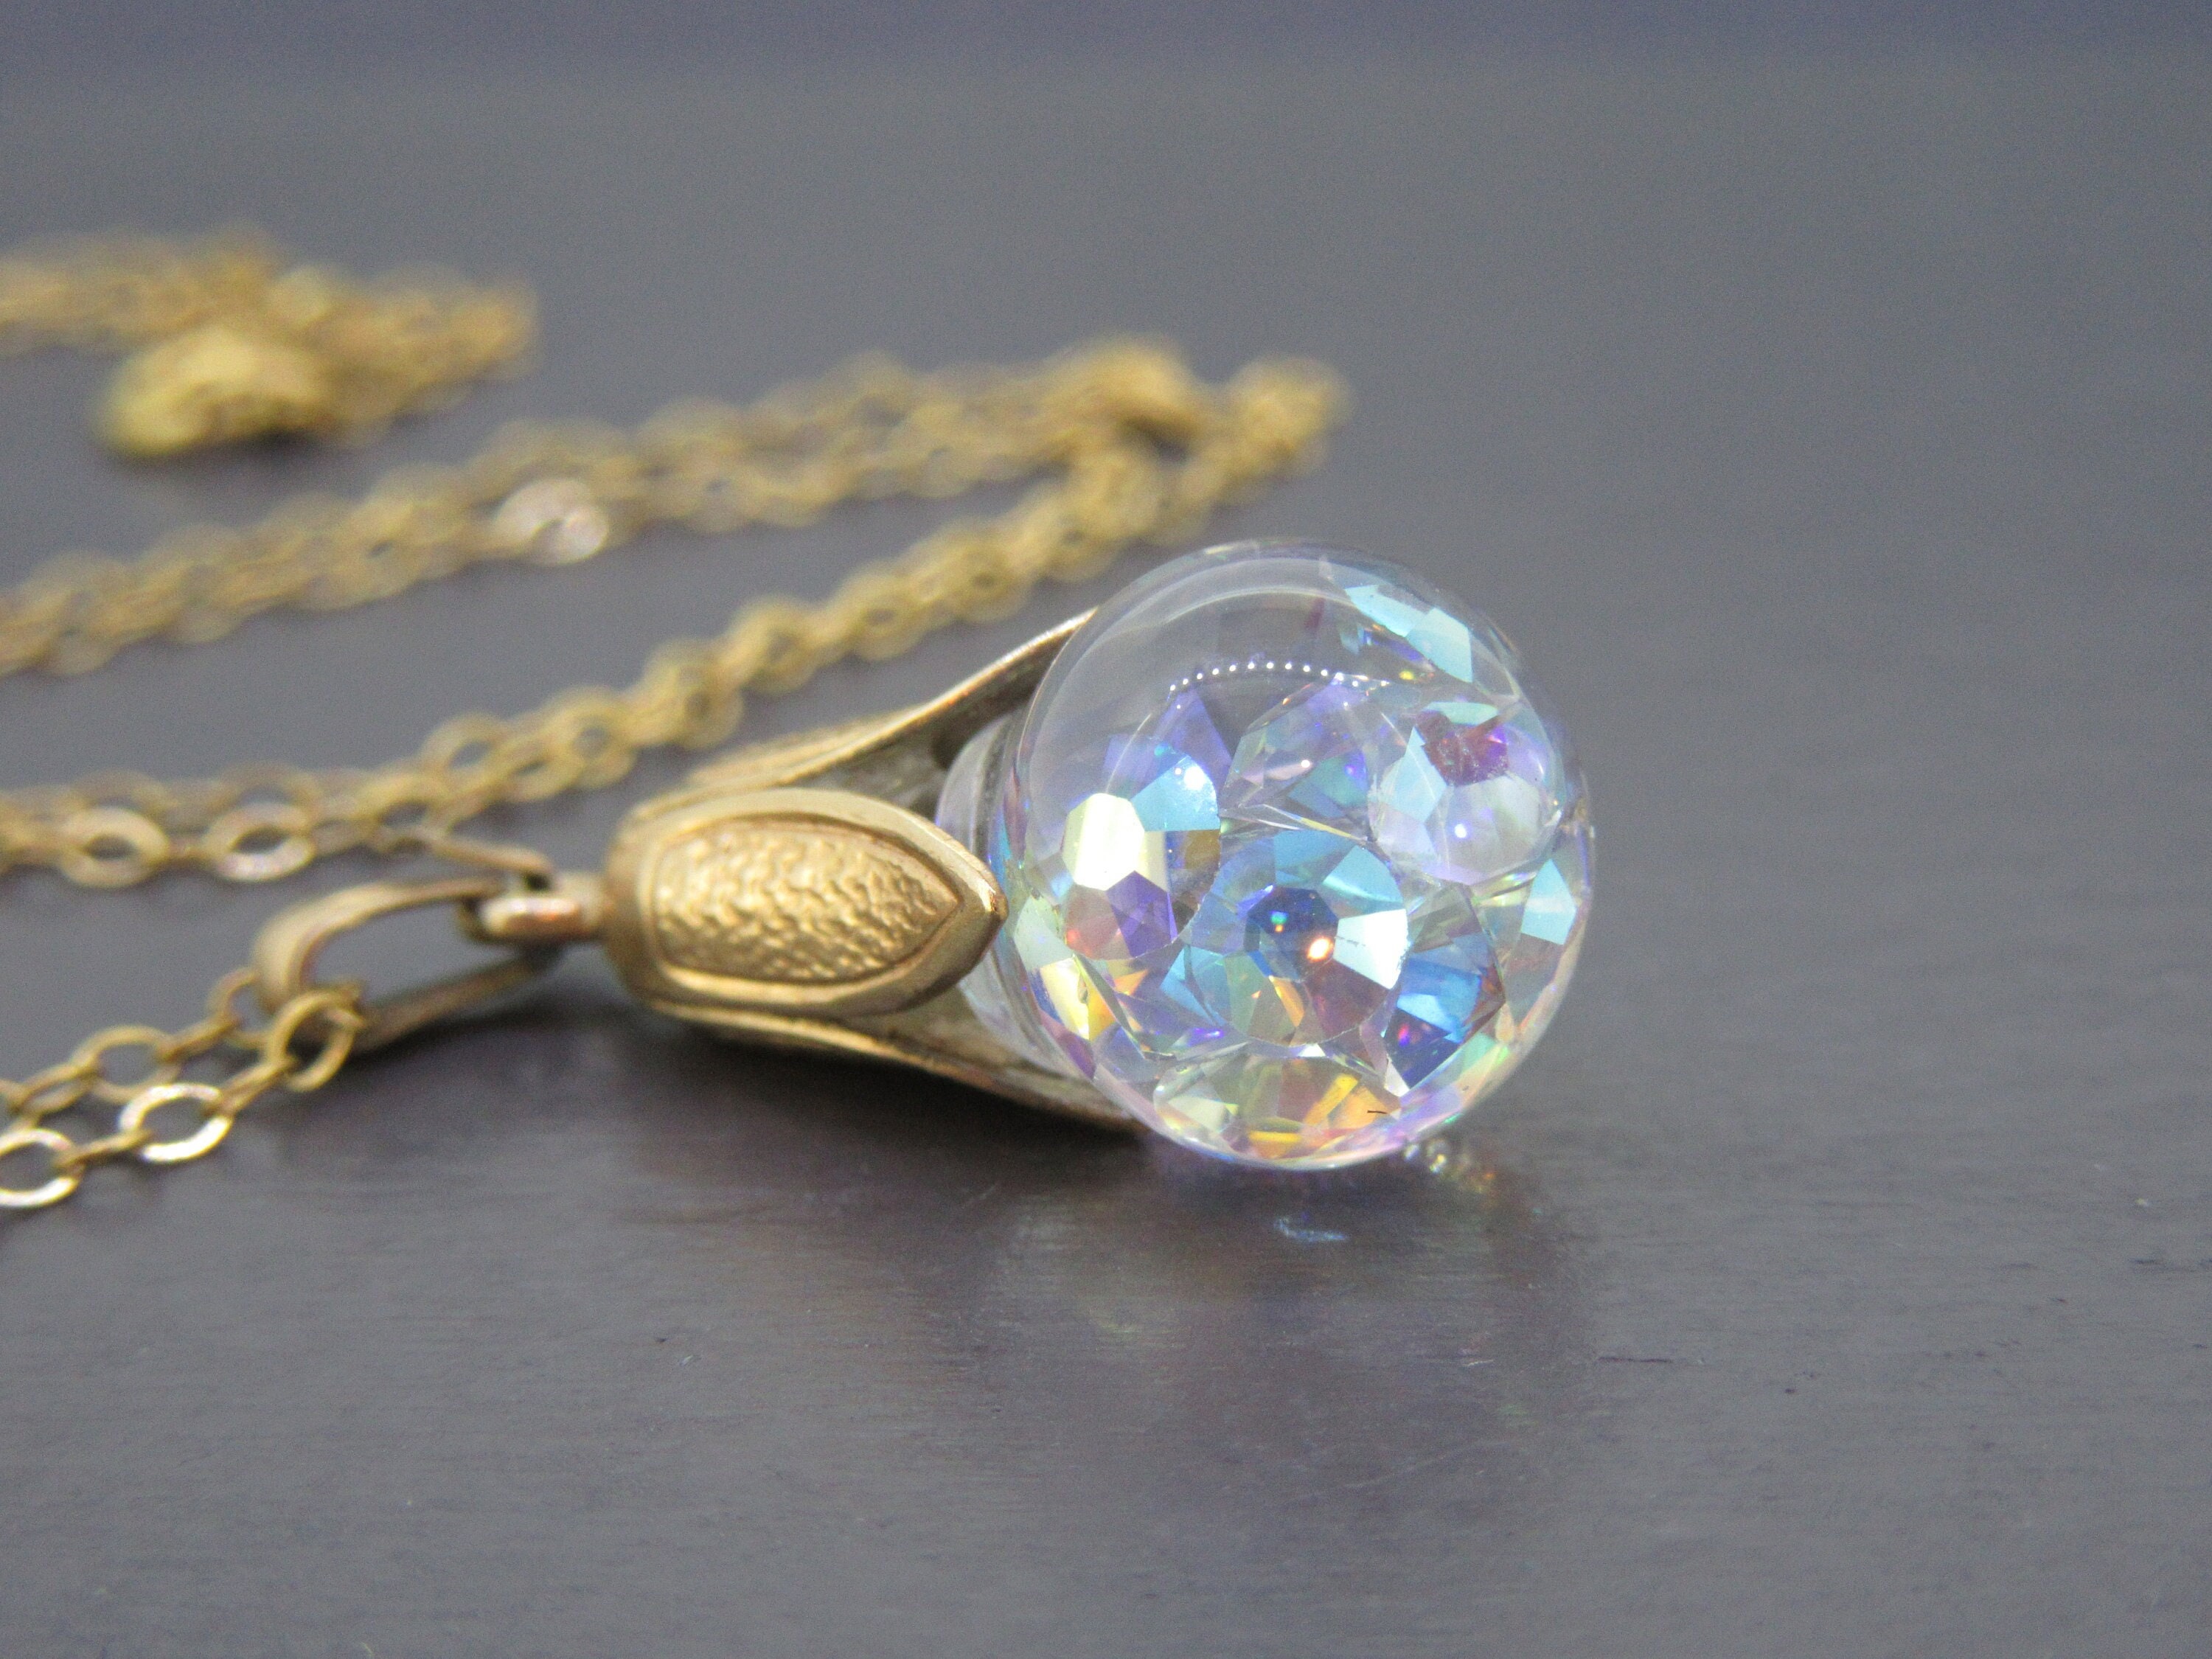 Antique 12k Gold Filled Floating Opal Pendant Necklace Vintage Art Nouveau  Opal Opalite Jewelry Teardrop Pendant Necklace Gift for Her - Etsy